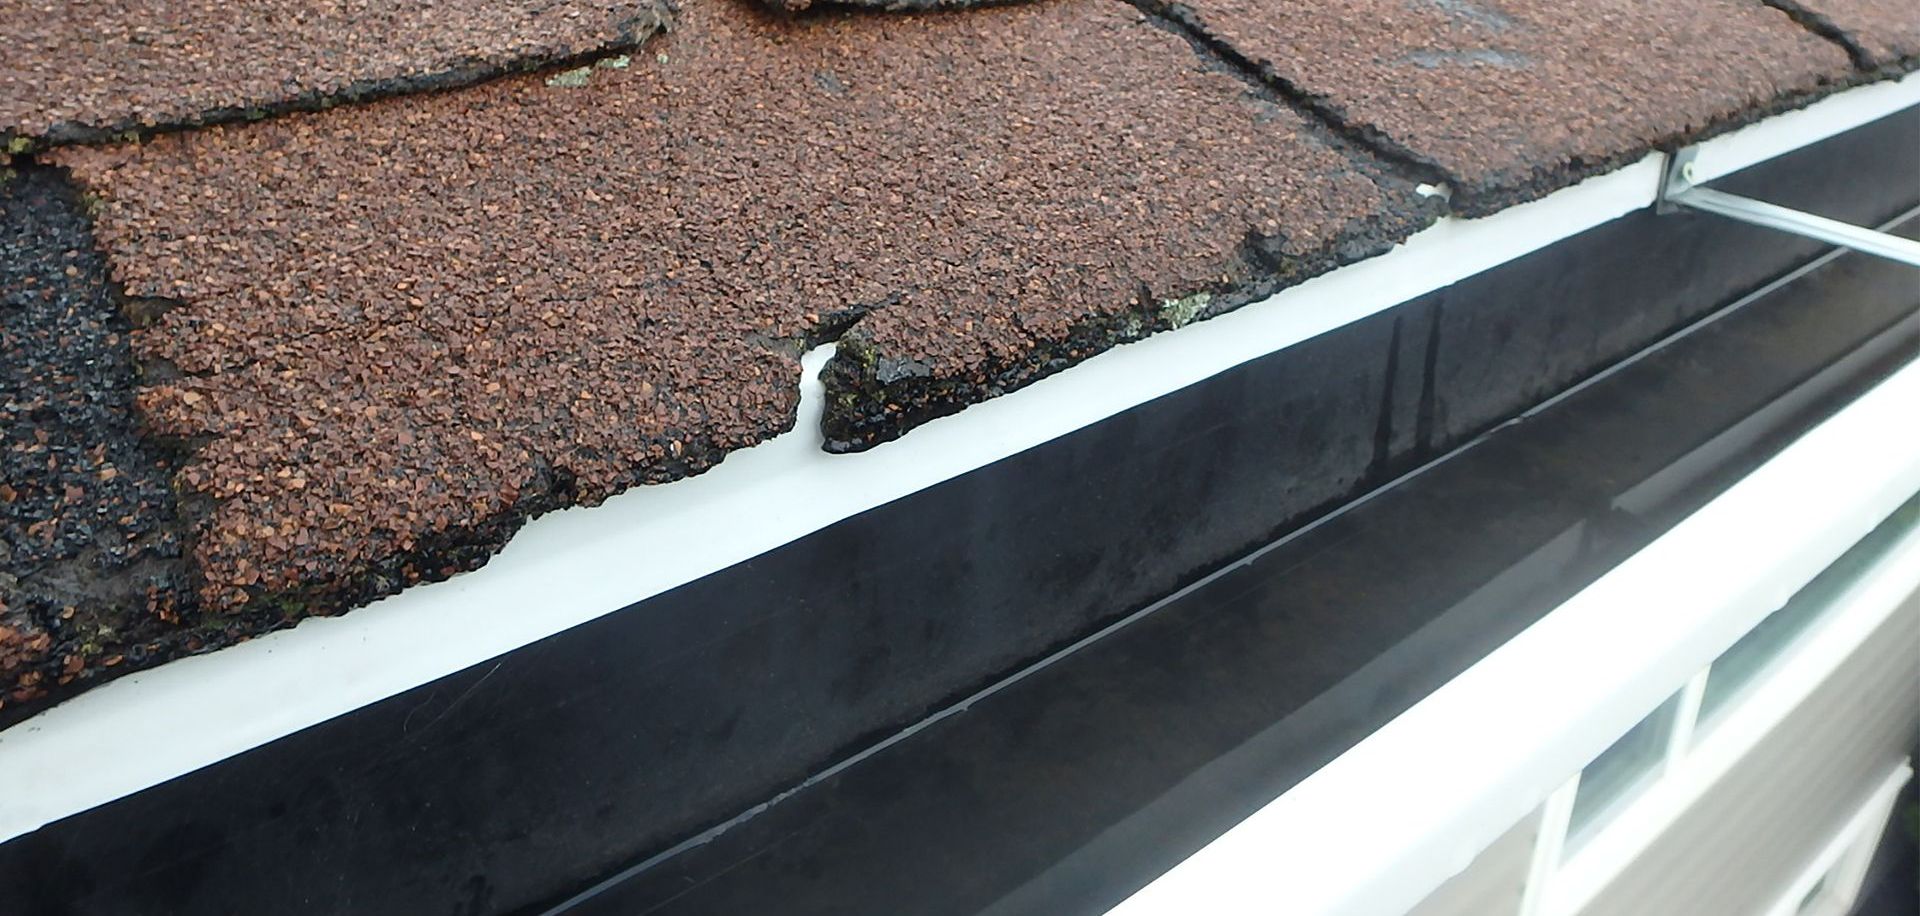 worn roof shingles